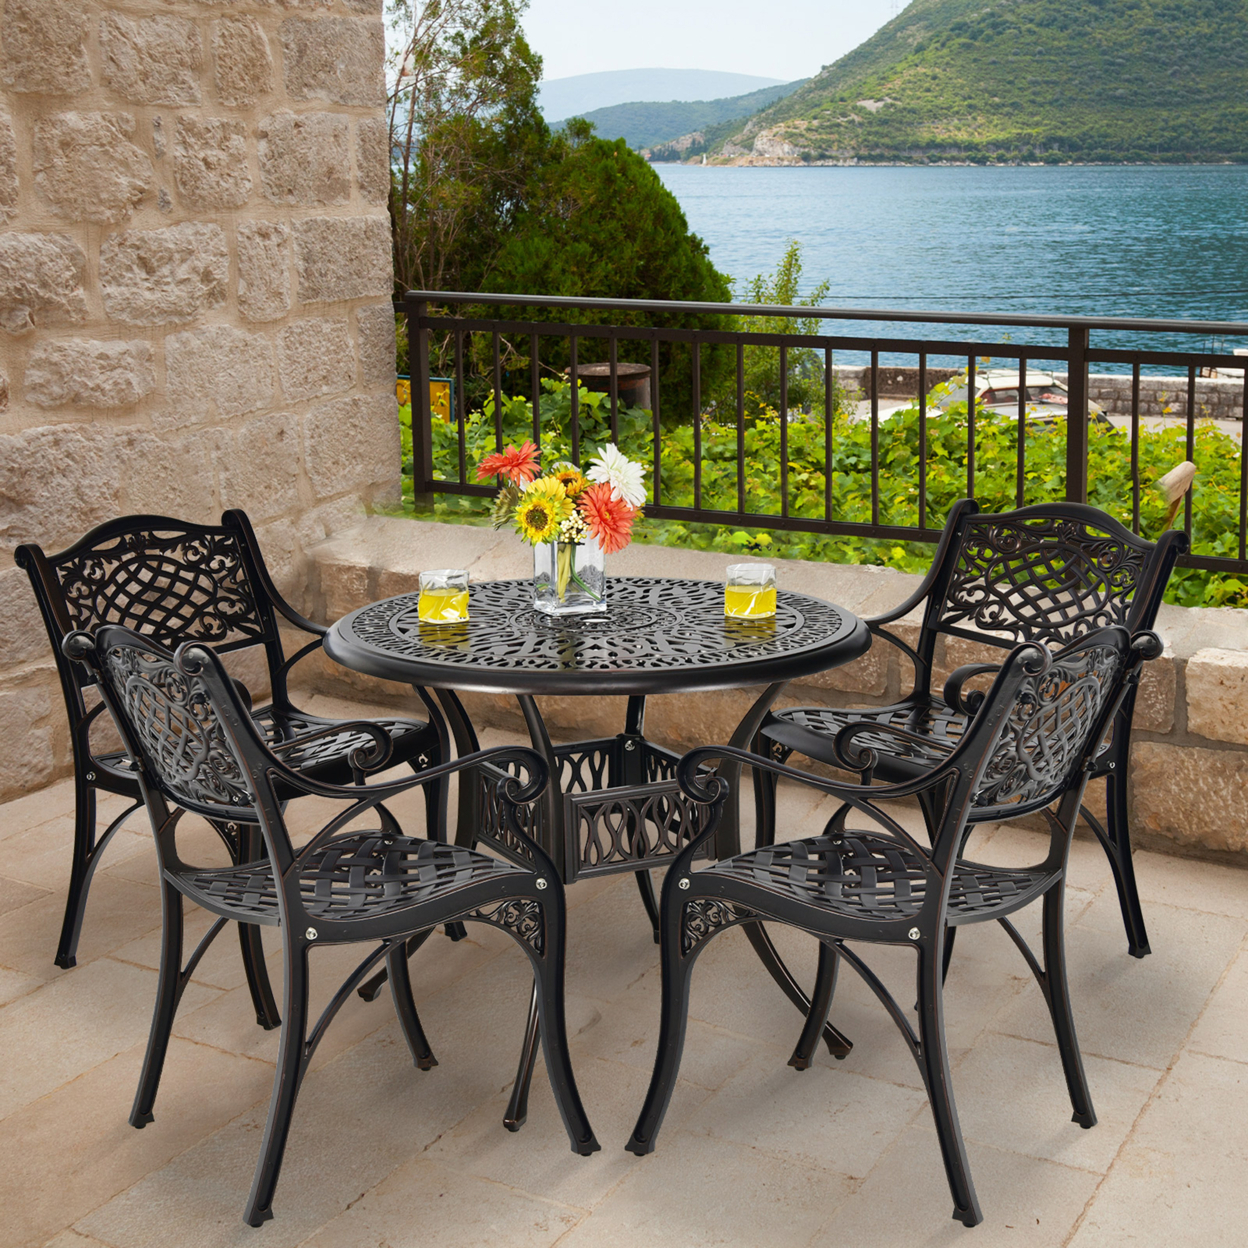 5PCS Cast Aluminum Patio Bistro Set Outdoor Dining Table & Chair Furniture Set